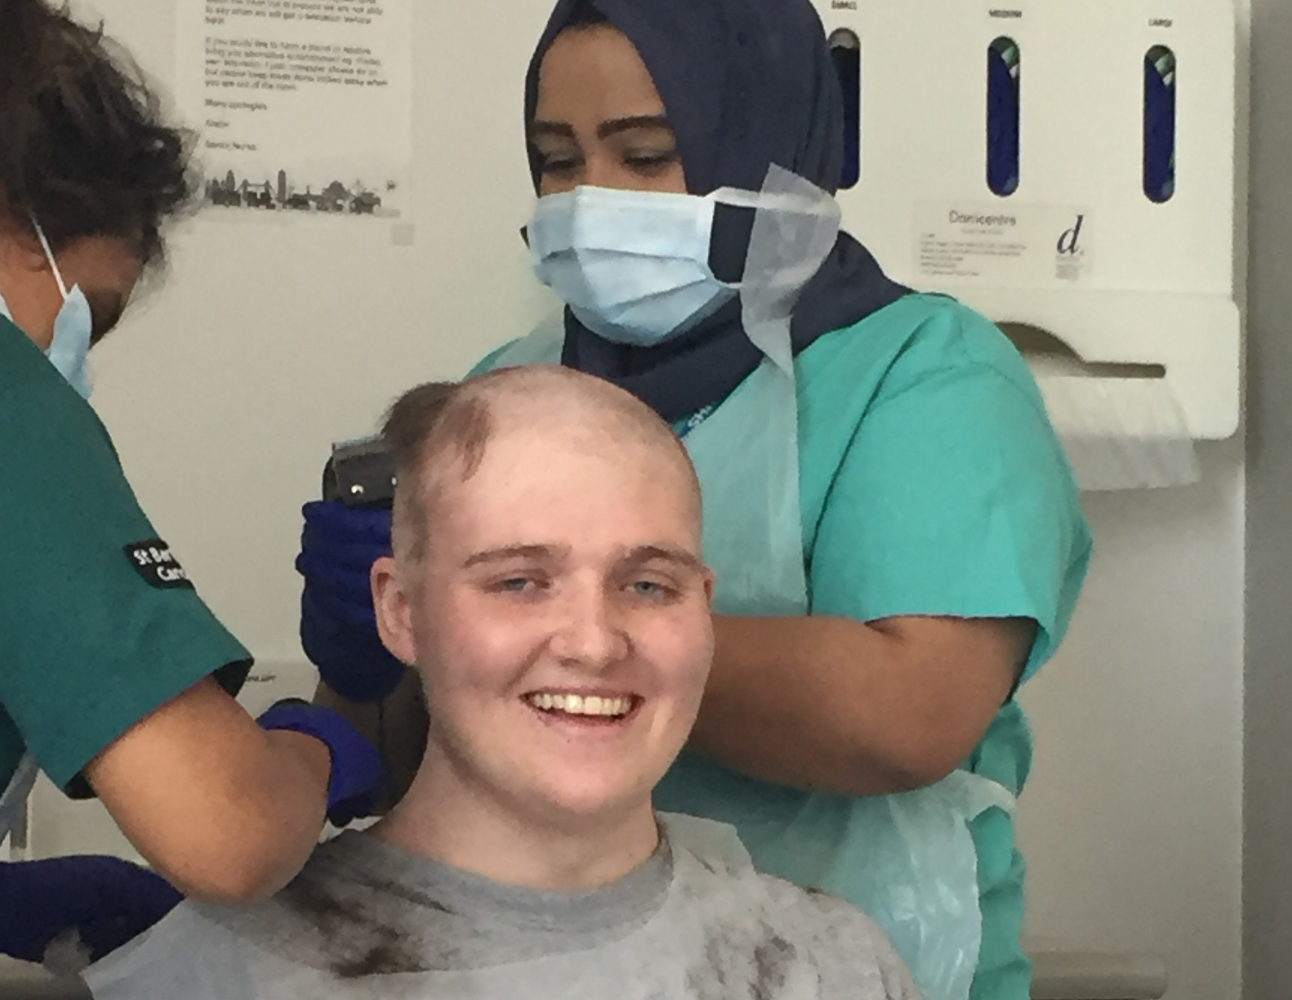 Callum having his head shaved in hospital